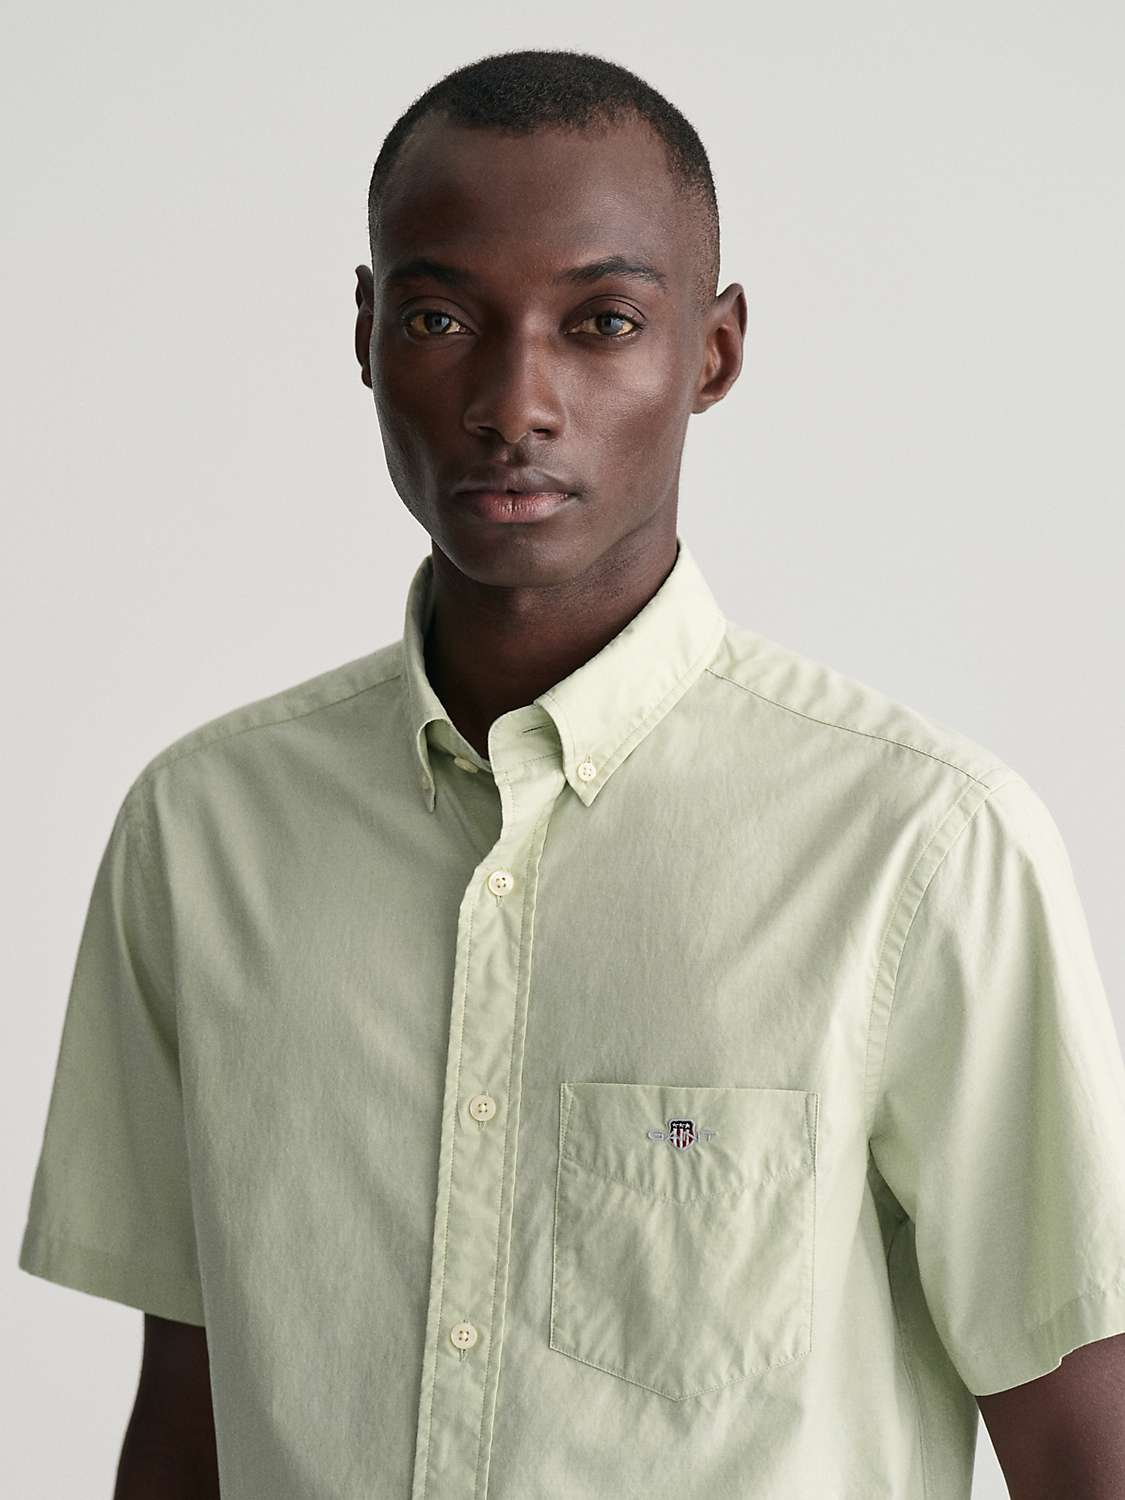 Buy GANT Regular Fit Short Sleeve Poplin Shirt, Milky Matcha Online at johnlewis.com